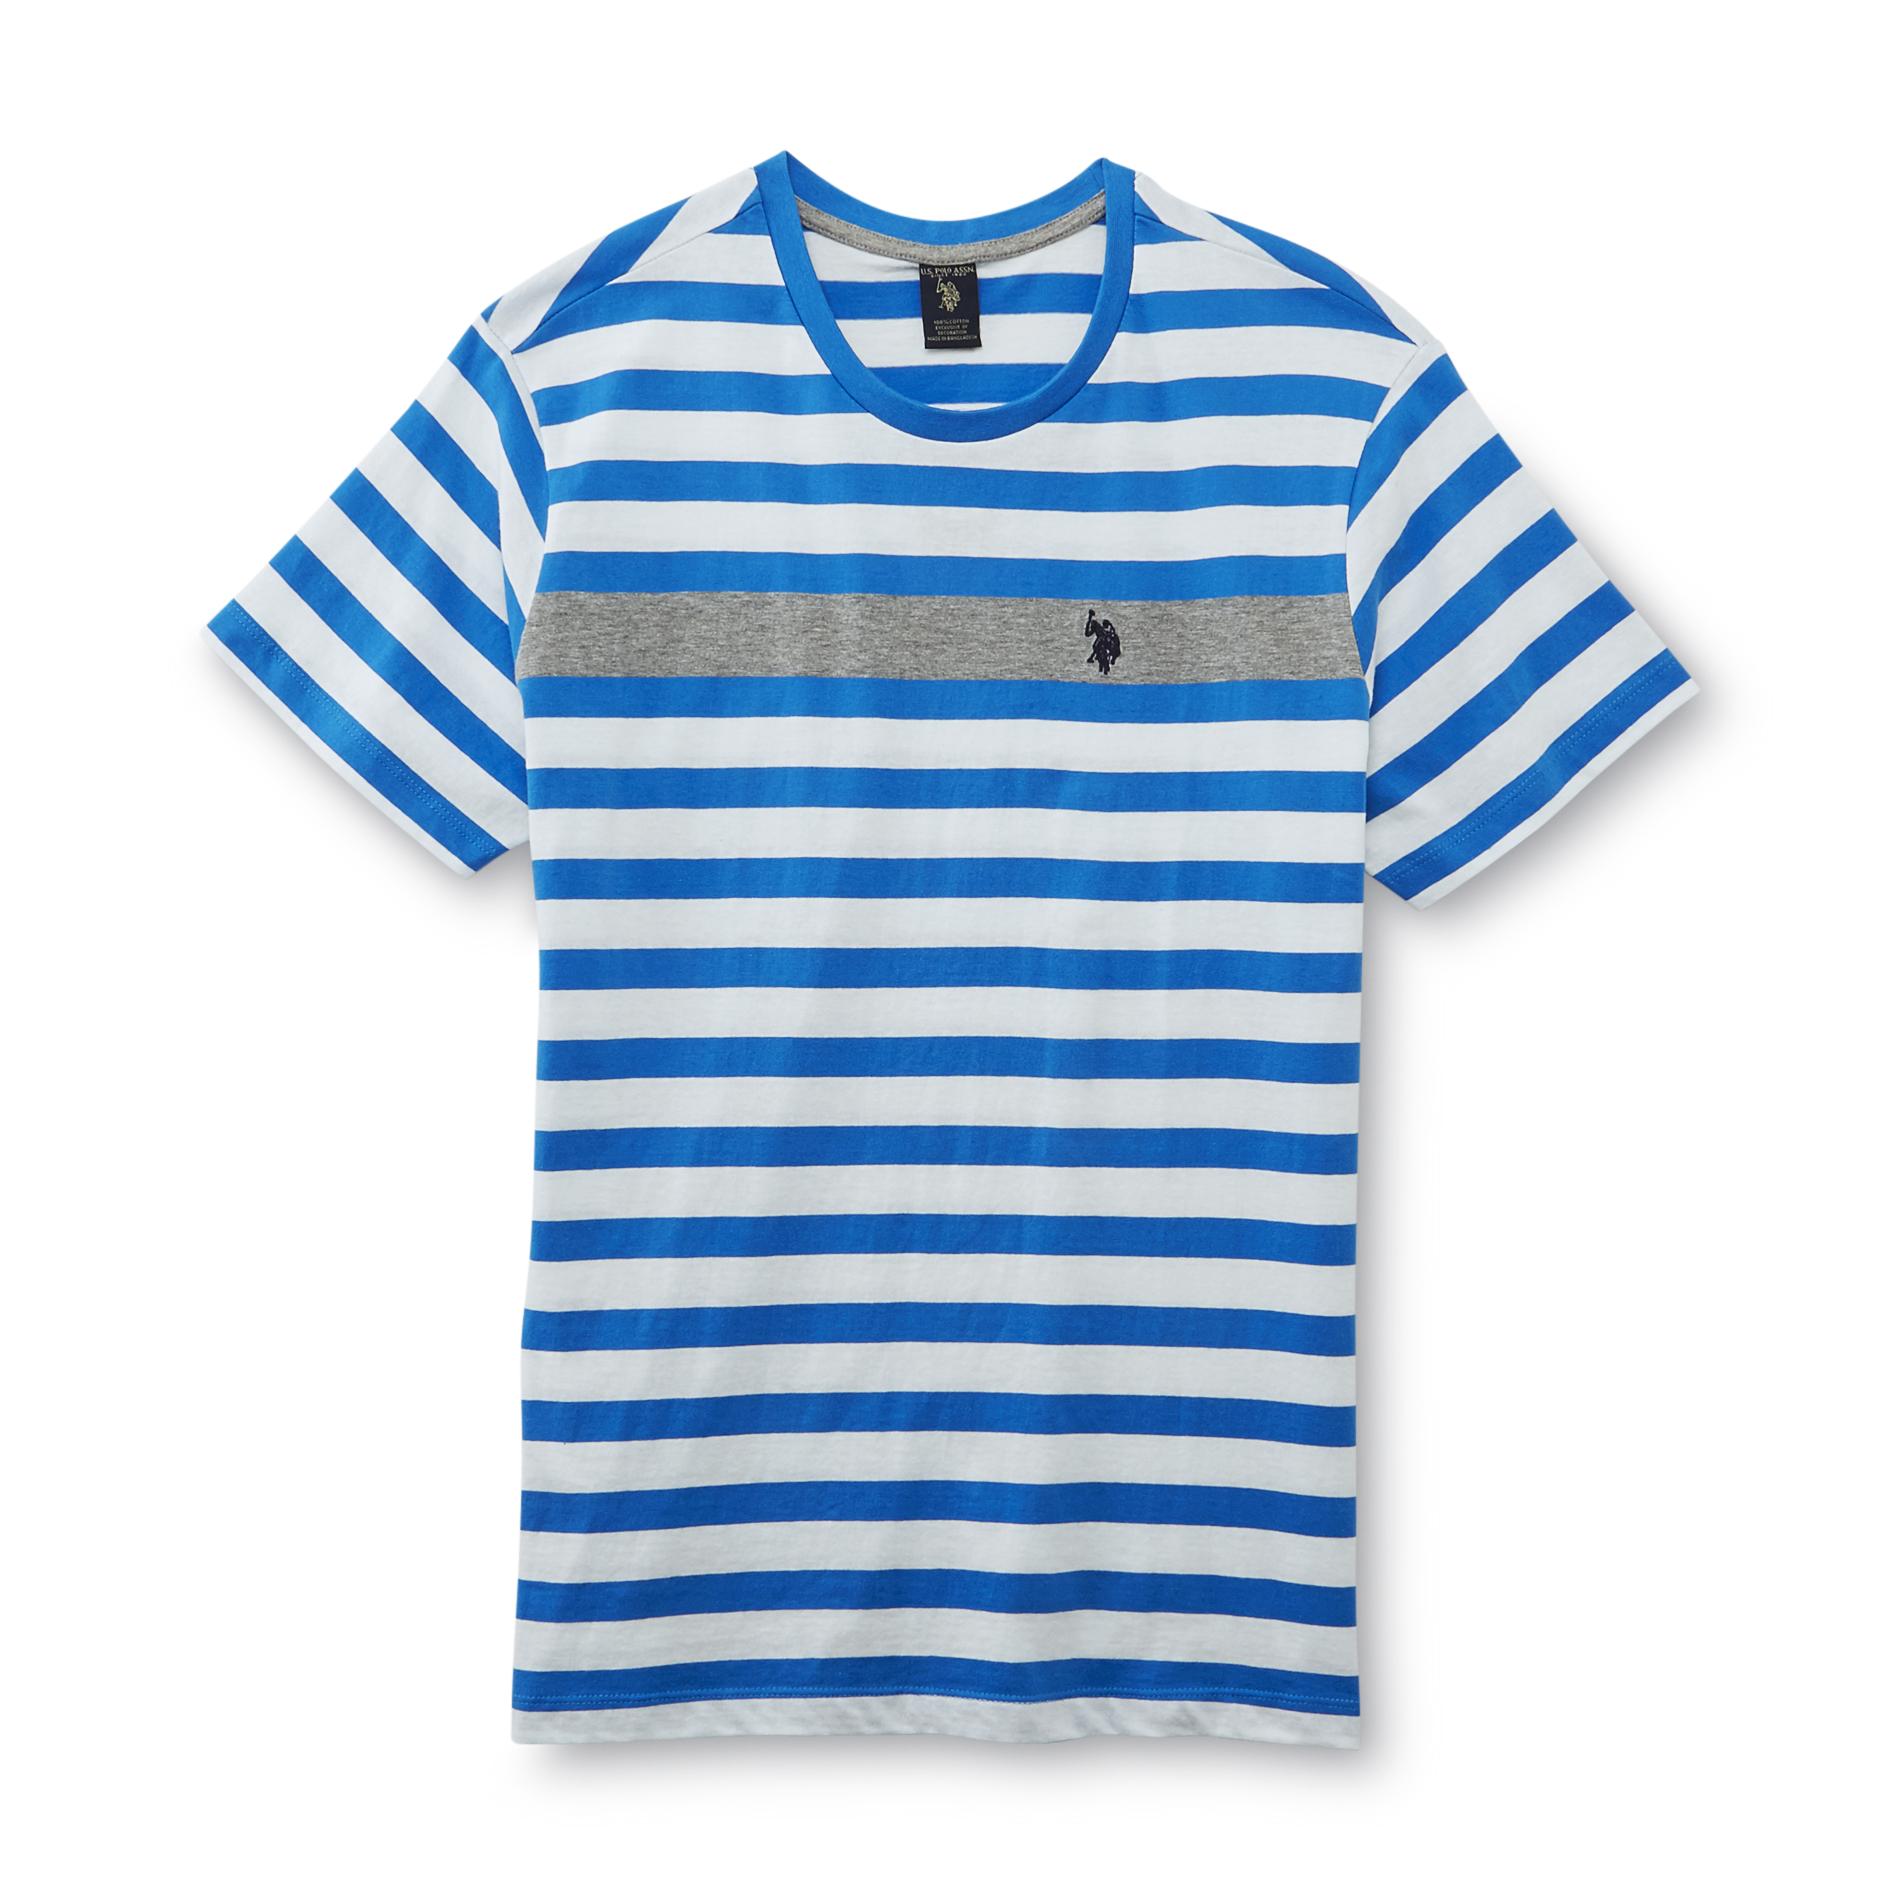 U.S. Polo Assn. Men's T-Shirt - Rugby Stripes